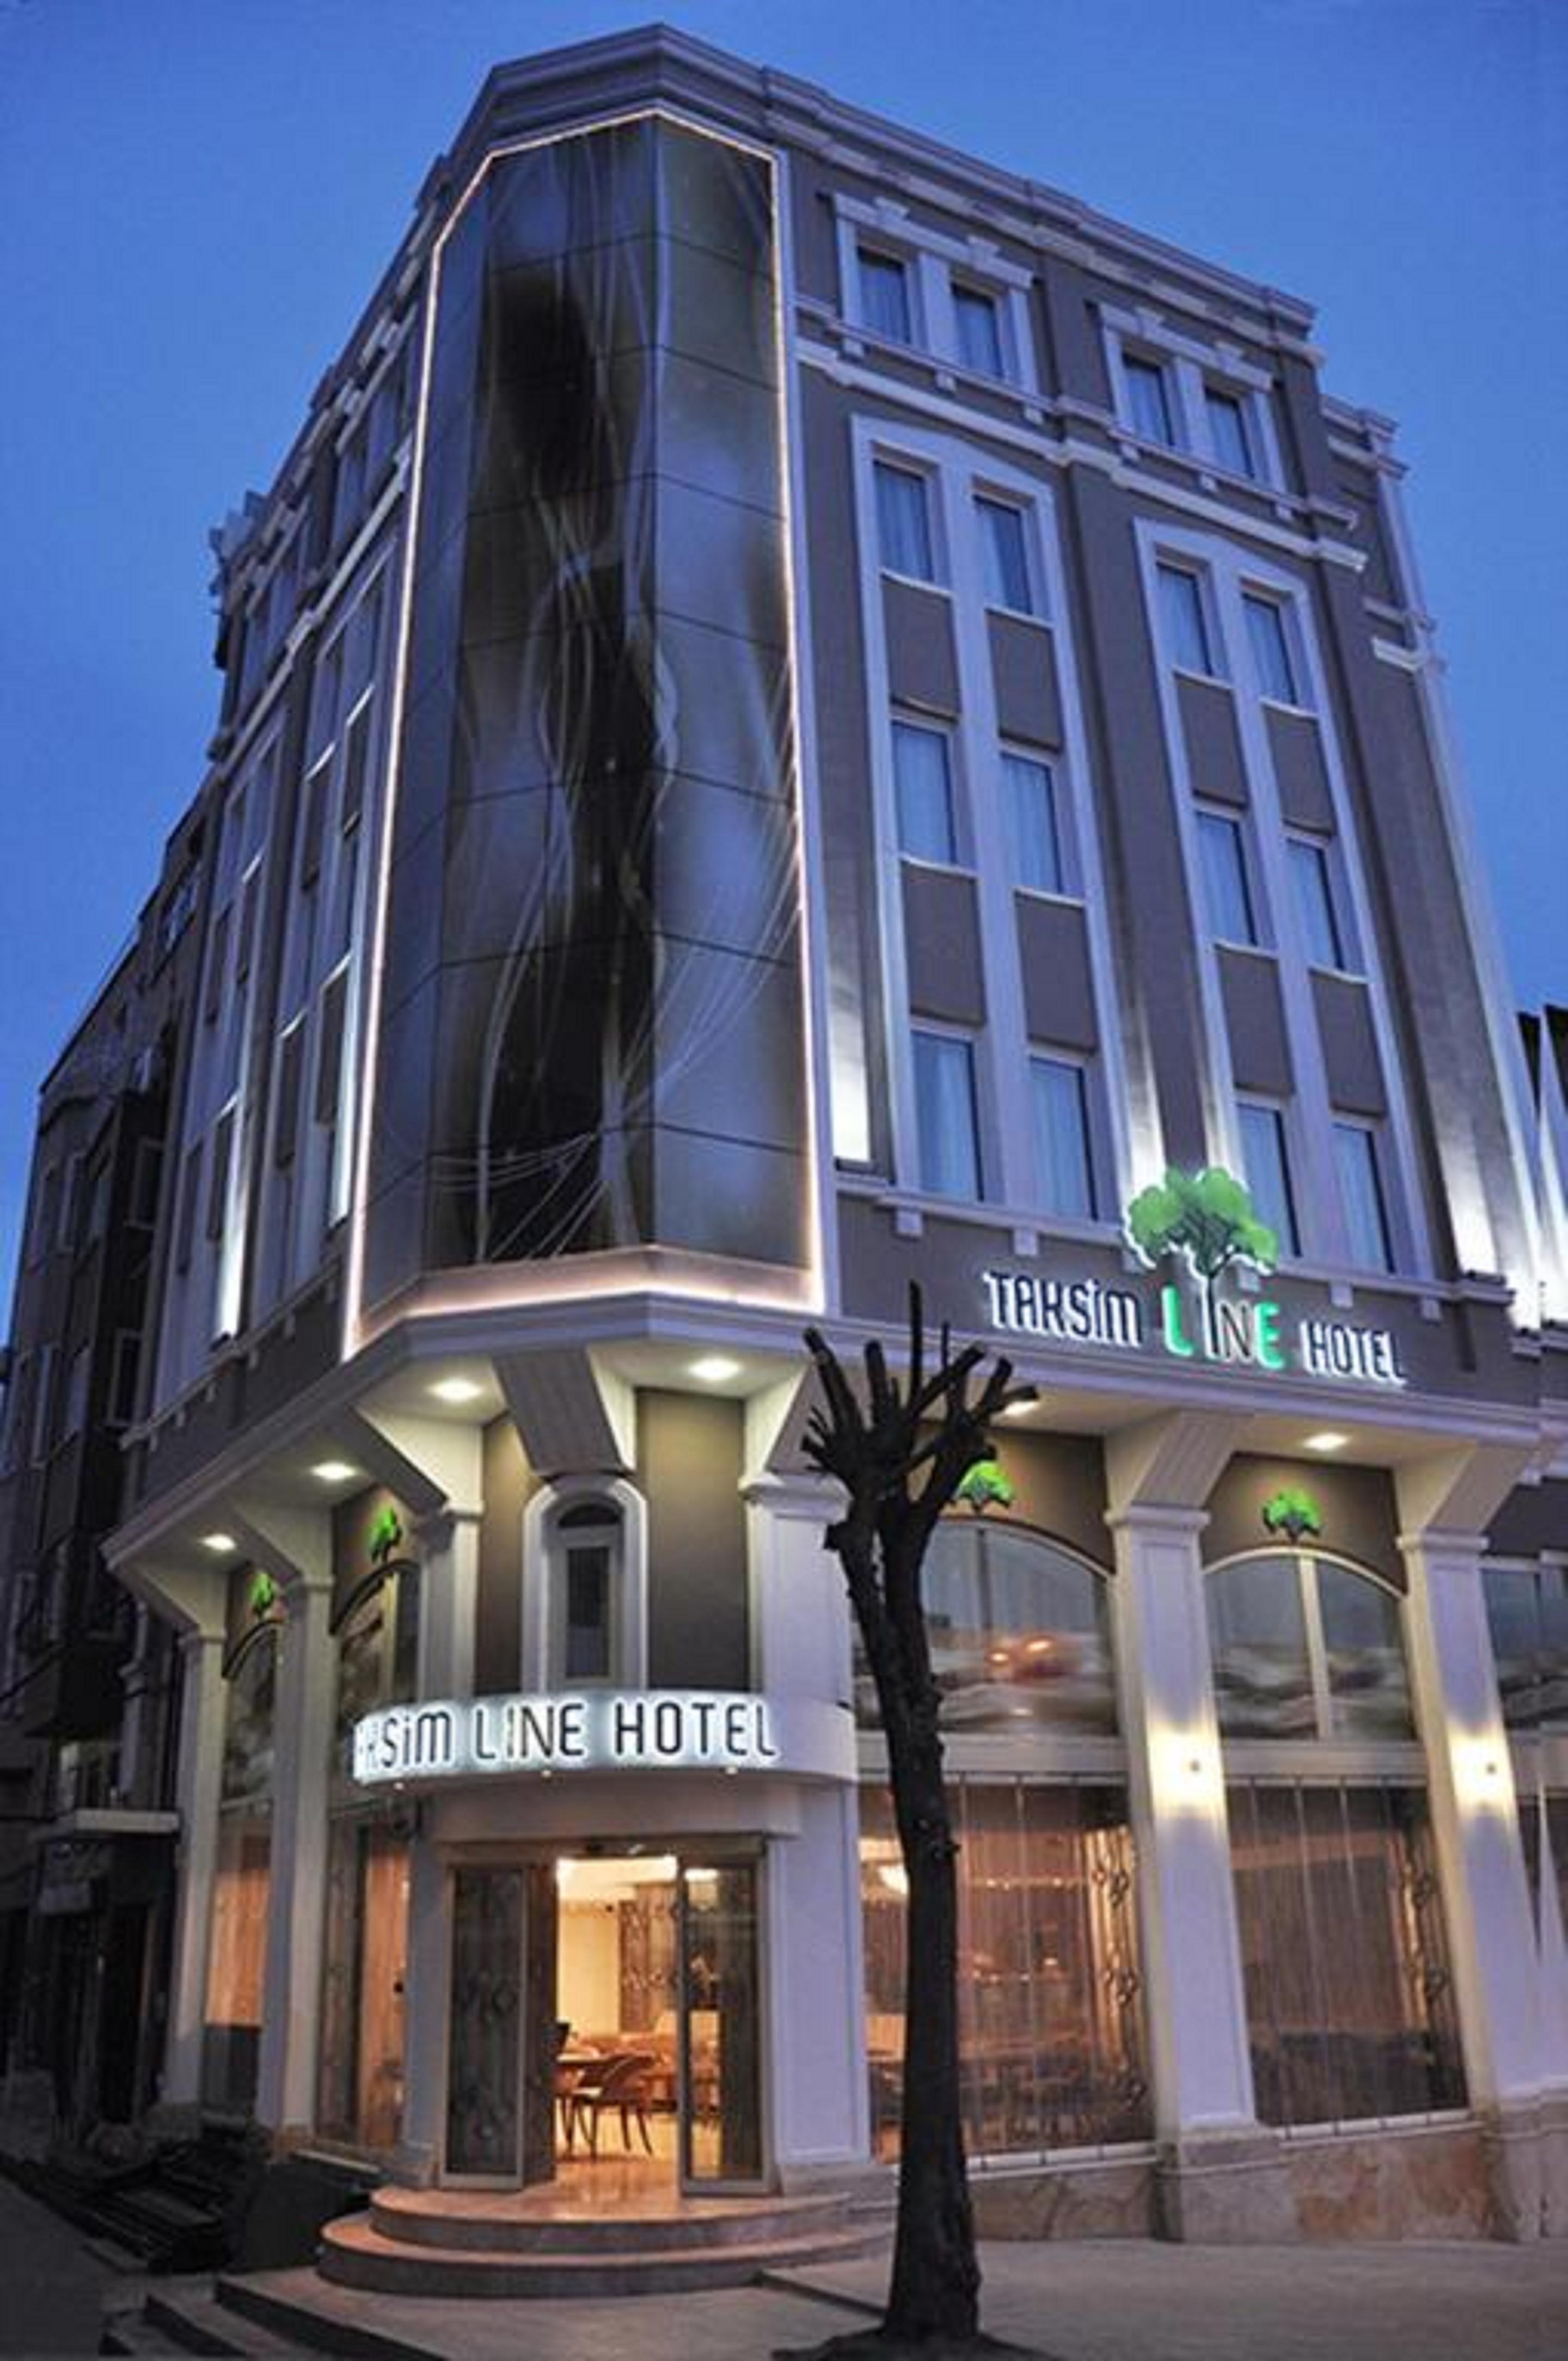 Vista da fachada Taksim Line Hotel